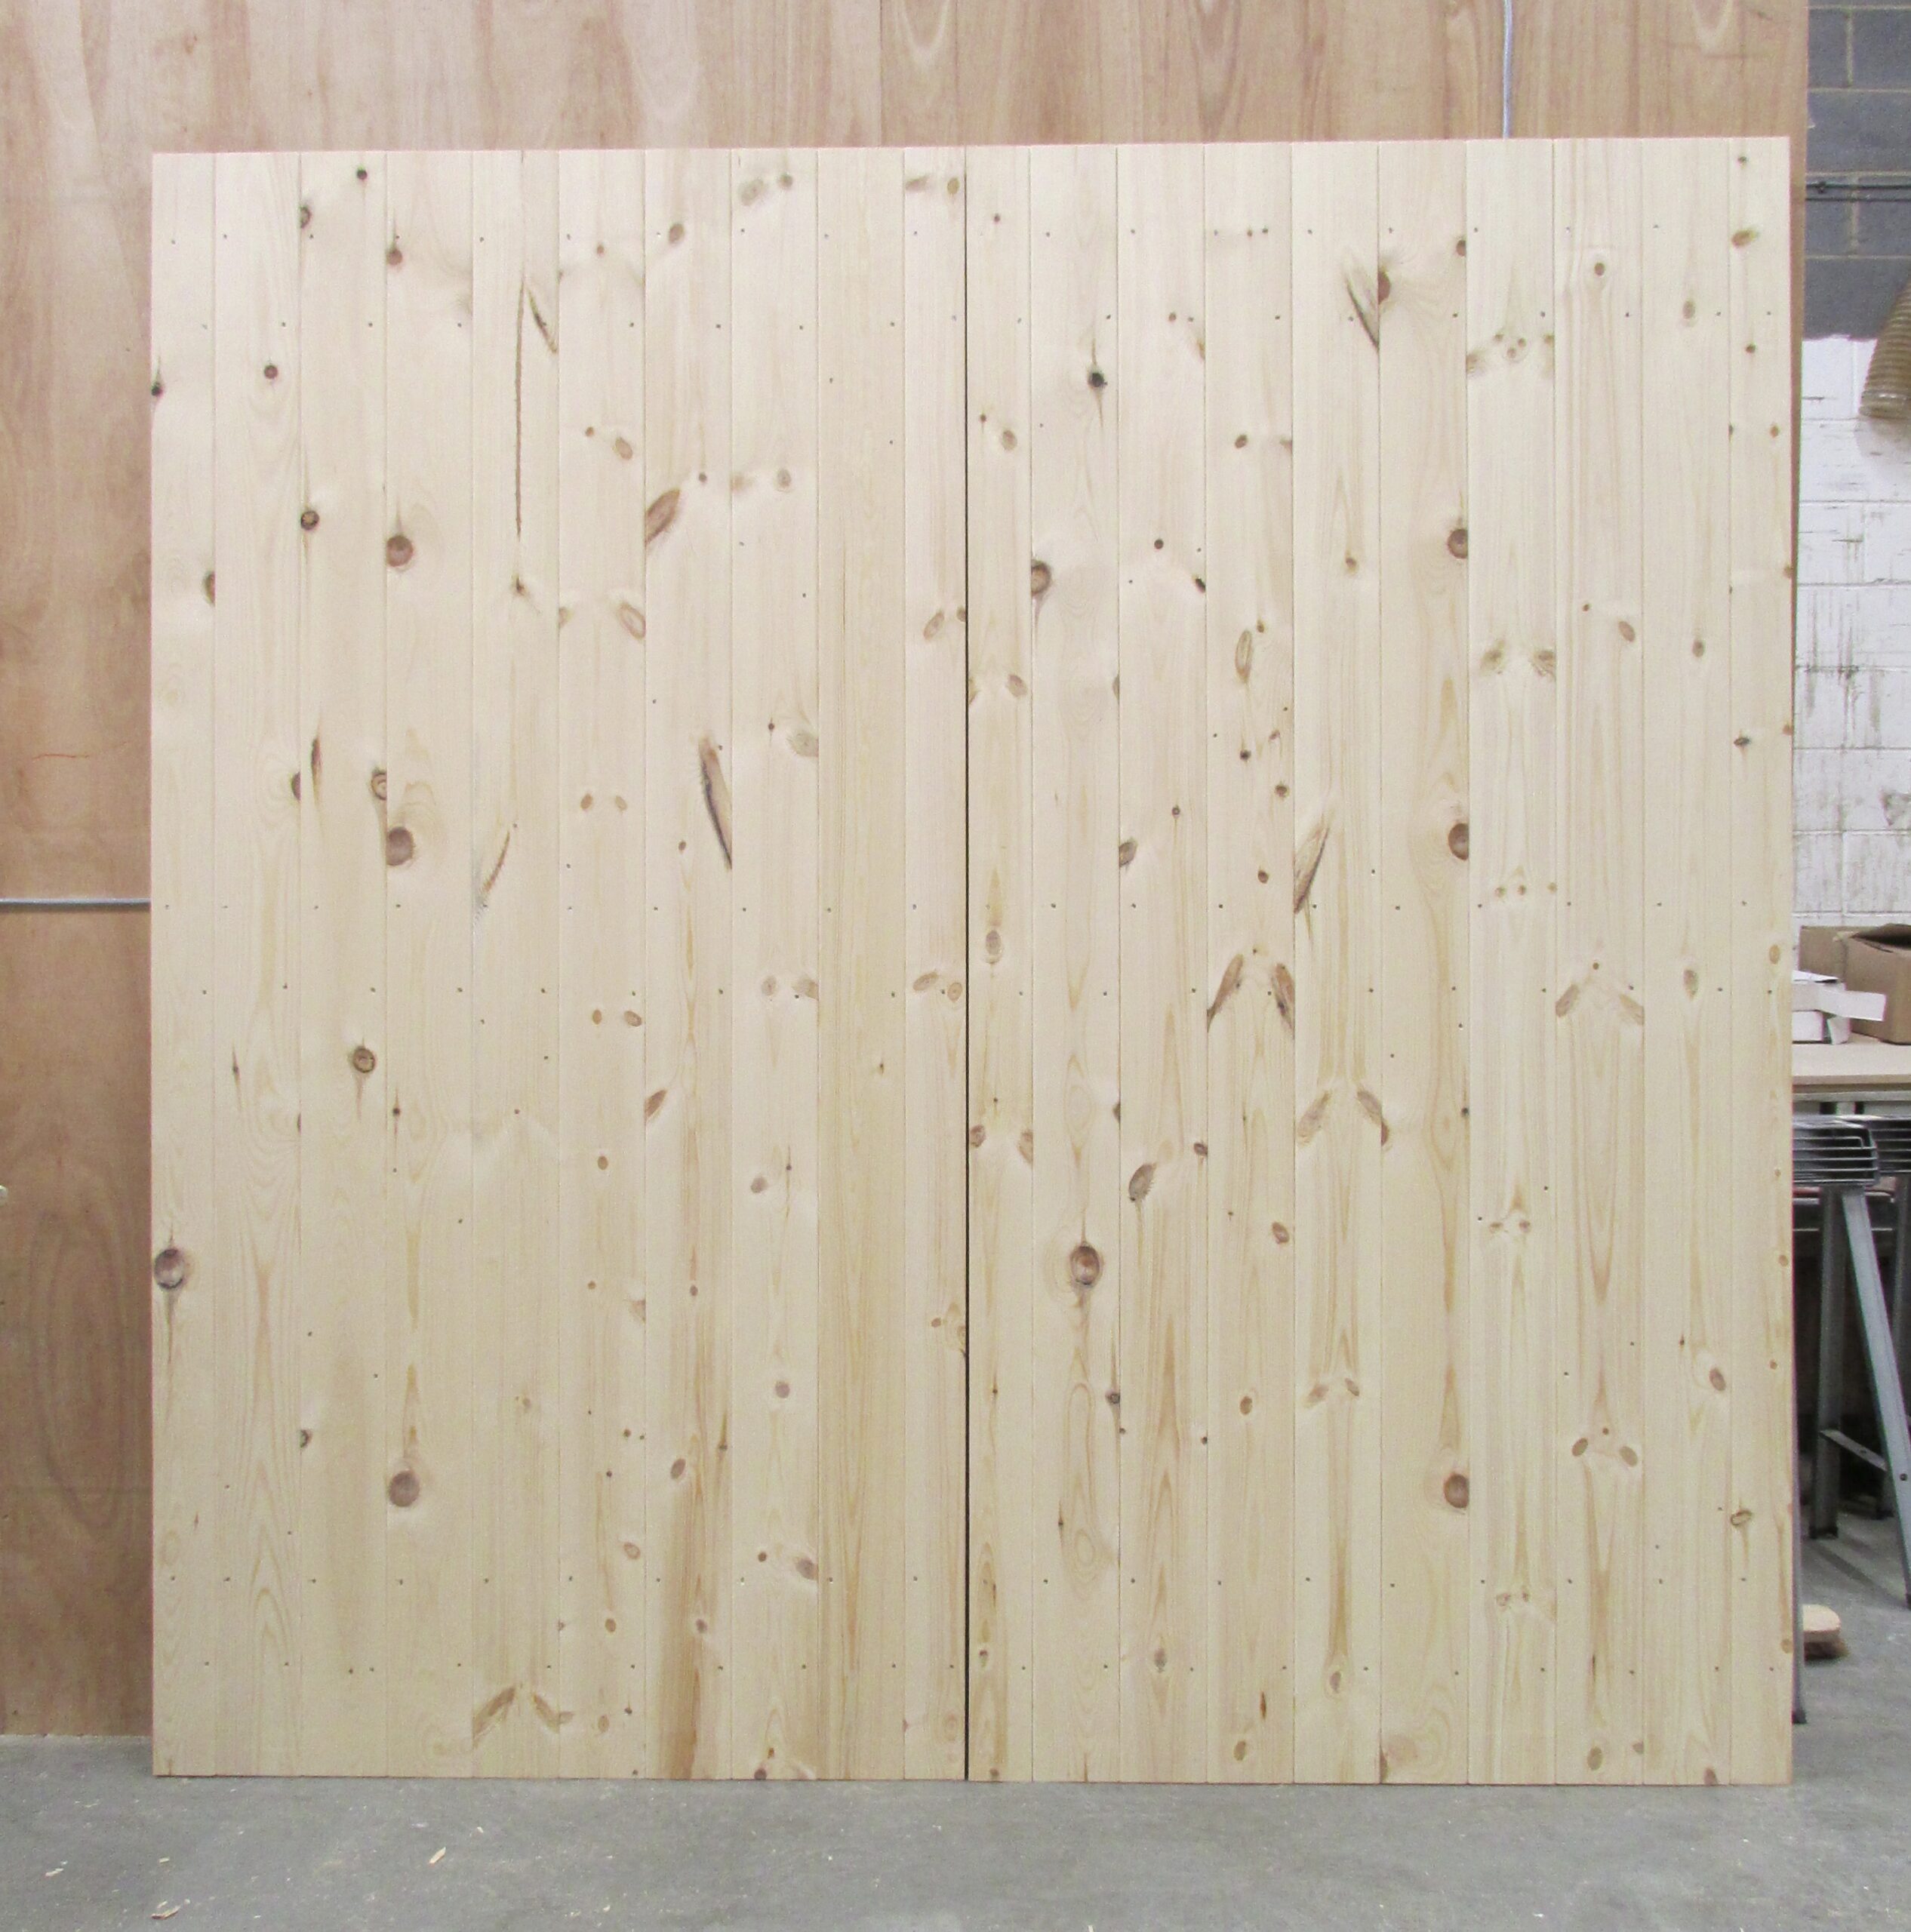 Wooden ledged and braced garage doors in workshop